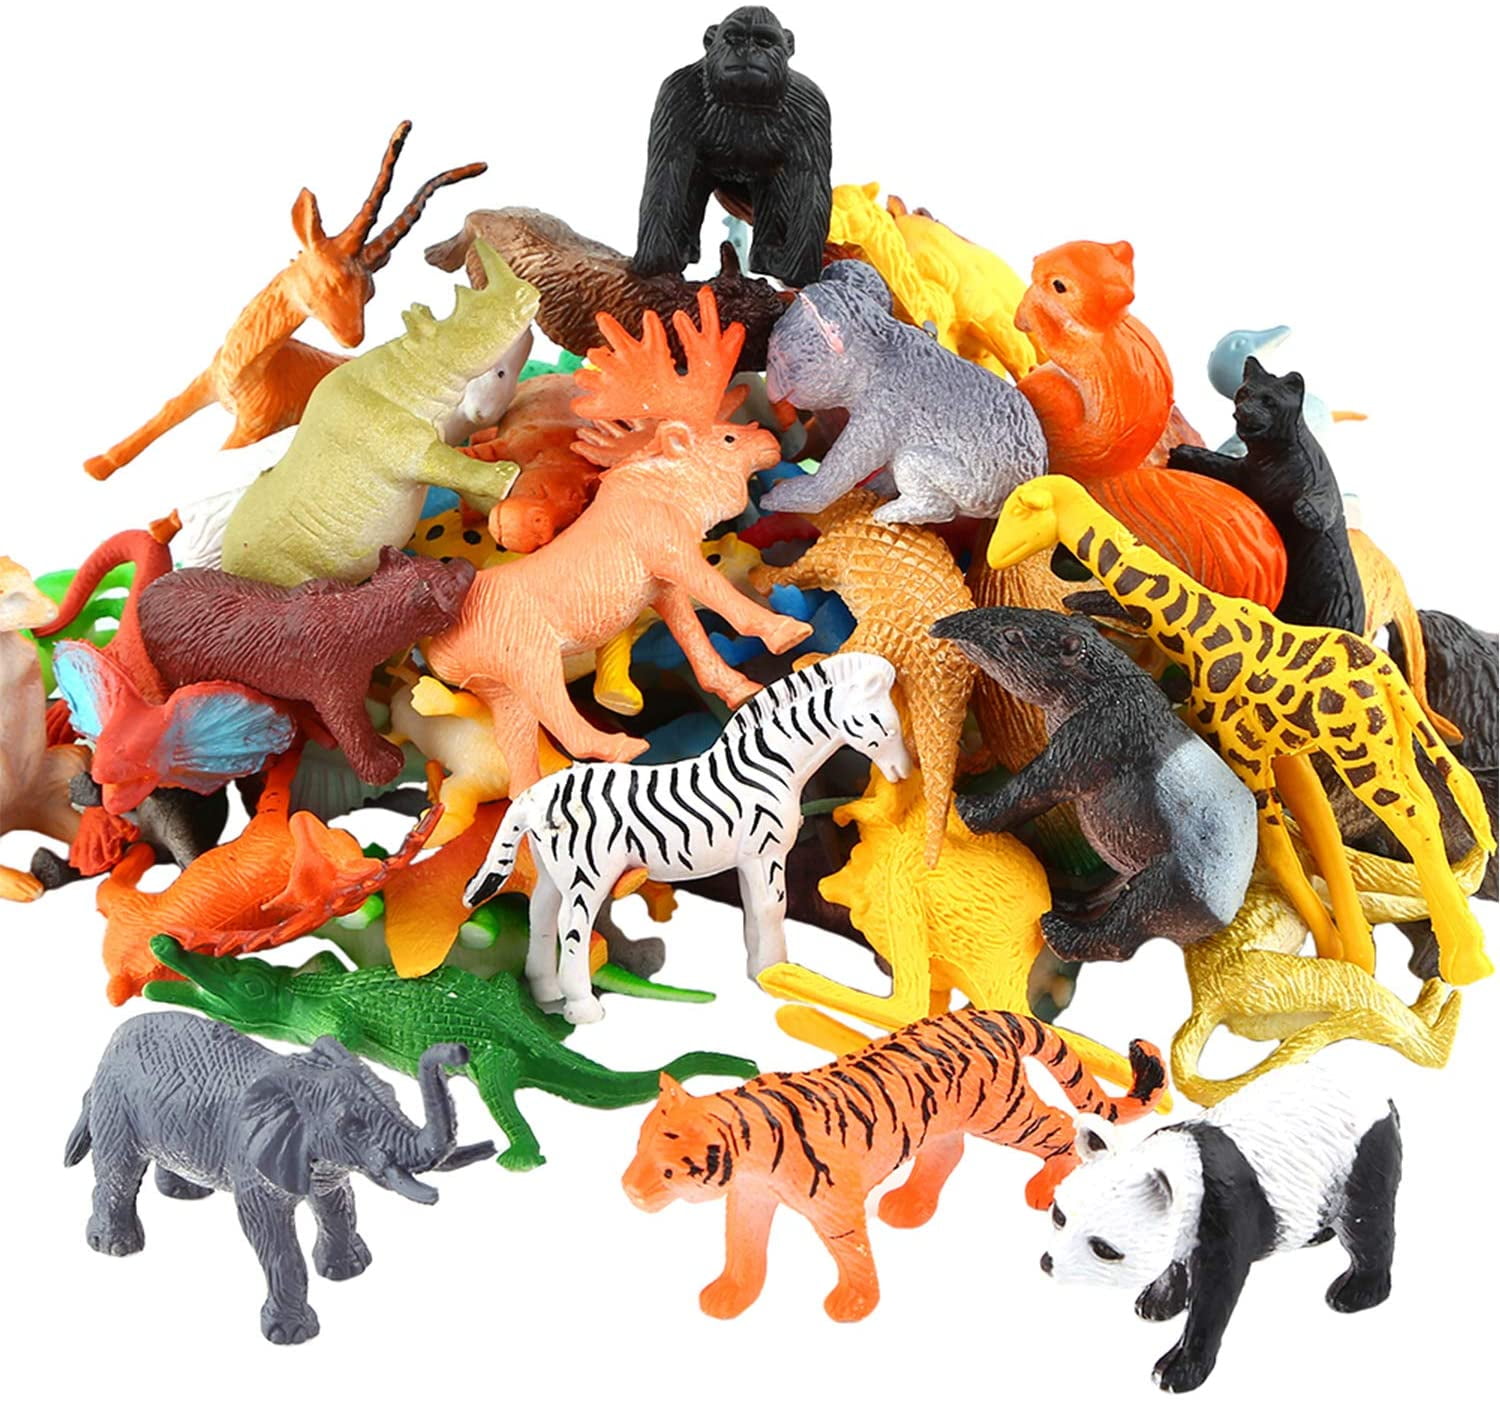 Rhinoceros Giraffe Plastic Jungle Zoo Wild Animal Kids Party Toy Xmas Gifts 